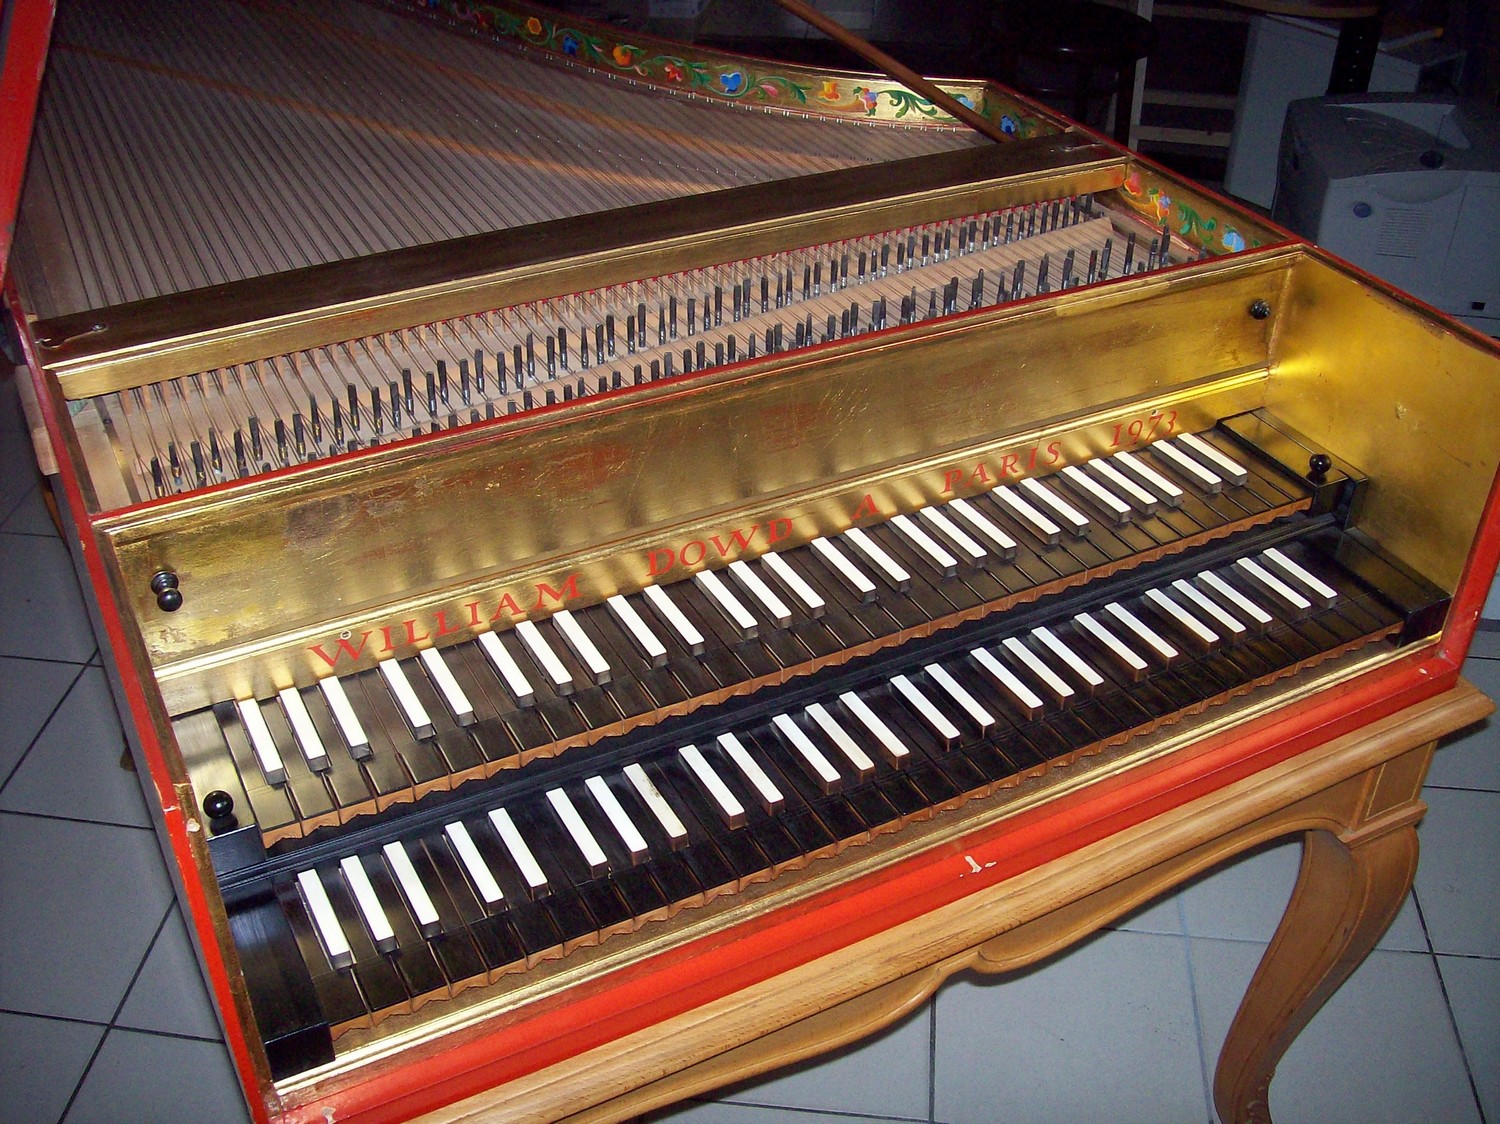 Клавесин 6 букв. Клавесин электронный. Клавиатура клавесина. Клавесин от Чимбало. Клавесин струнный музыкальный инструмент.